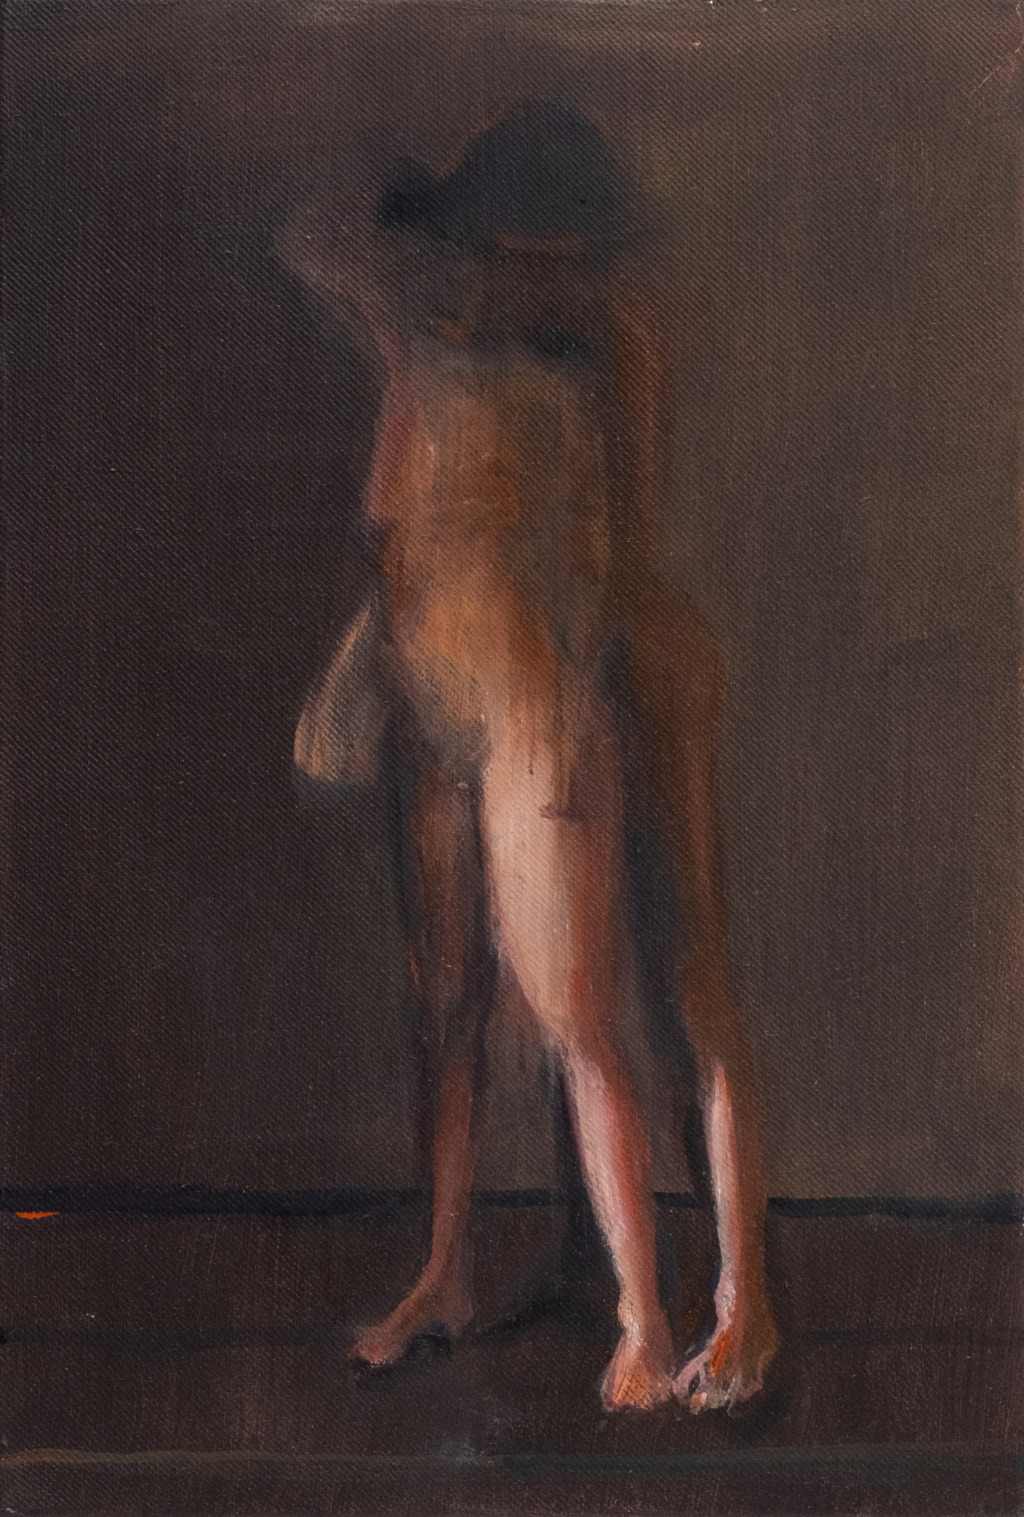 Andrea Muheim, Mit C. II, 2019
Oil on canvas
45 x 30 cm